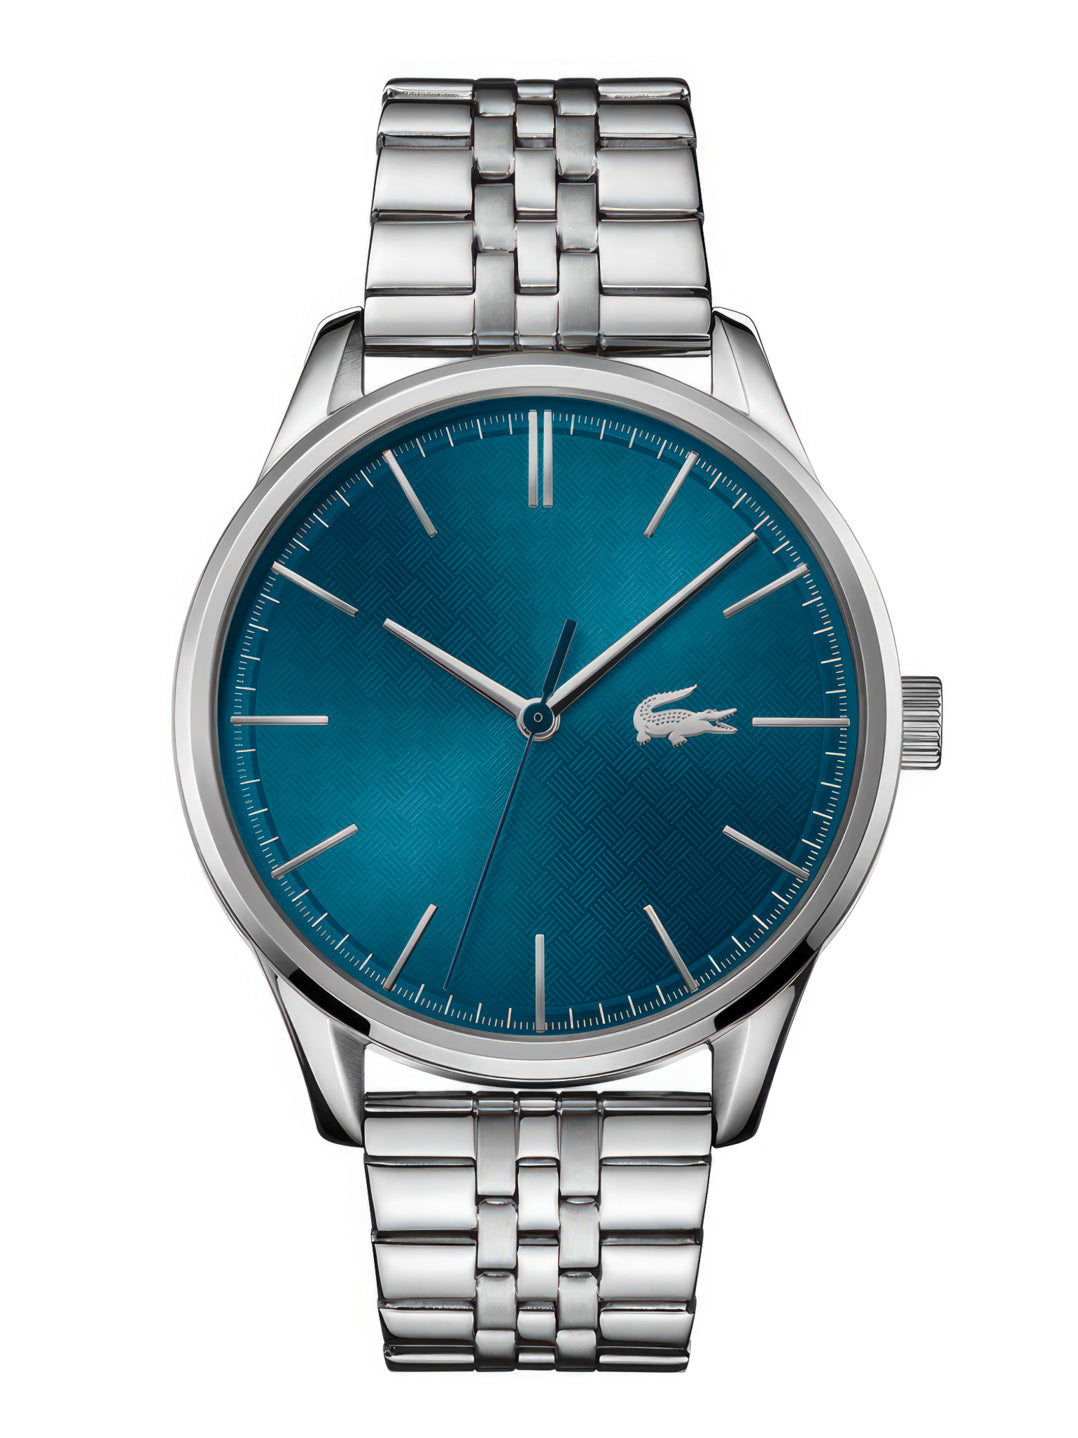 A gentlemen's Lacoste Men's Vienna Blue Watch 2011049 with a blue dial.